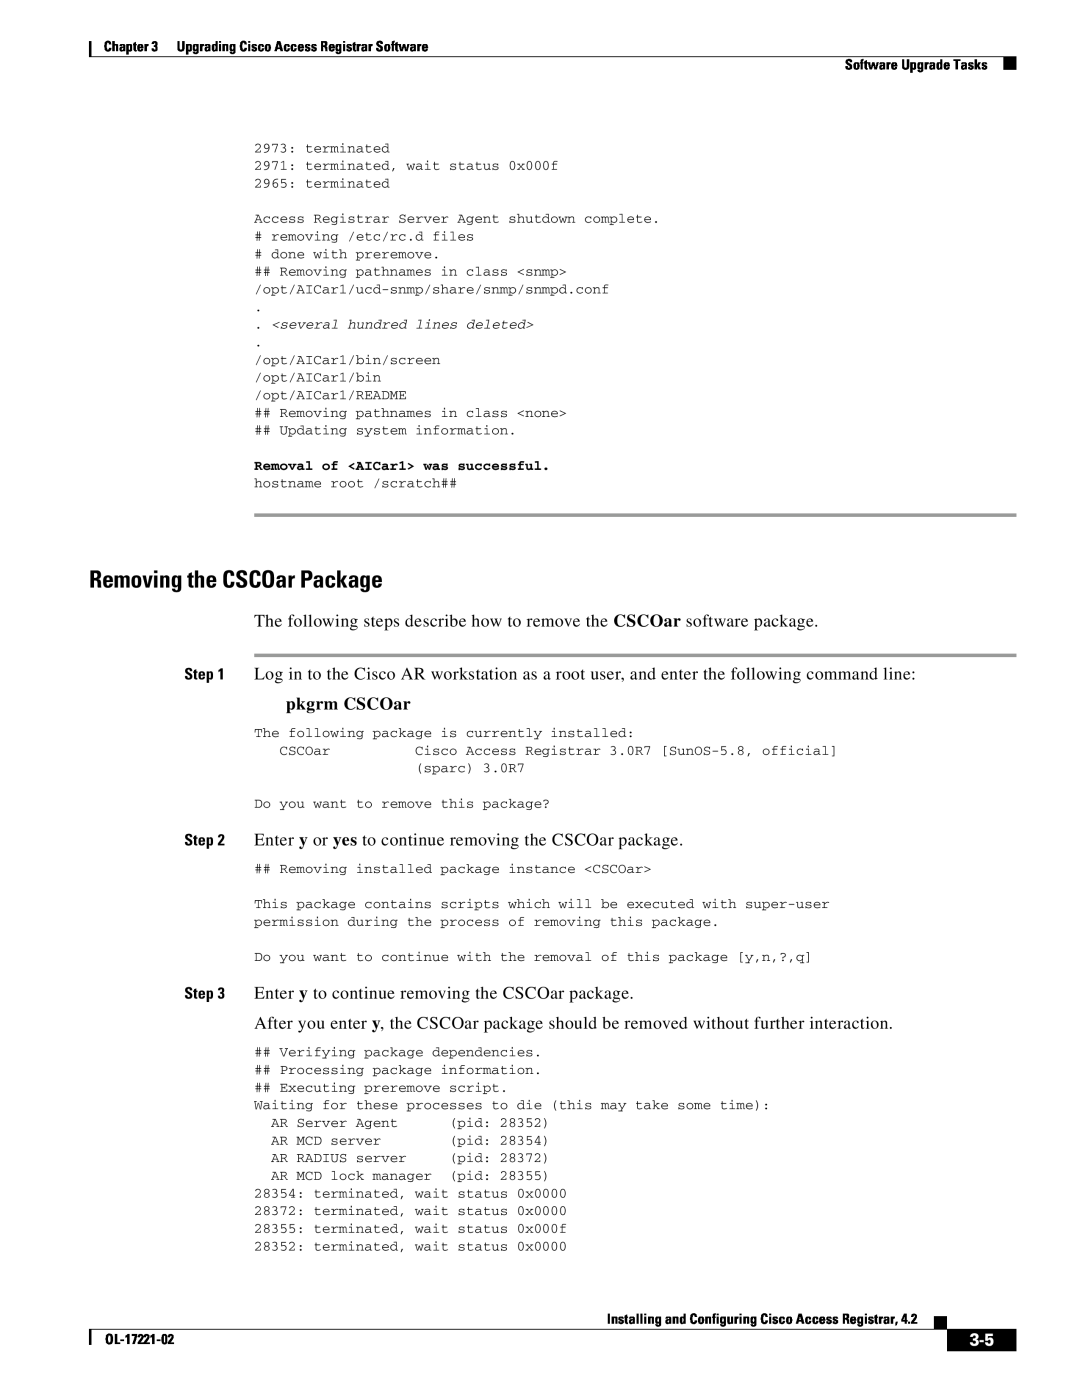 Cisco Systems 4.2 manual Removing the CSCOar Package, pkgrm CSCOar, Upgrading Cisco Access Registrar Software, OL-17221-02 